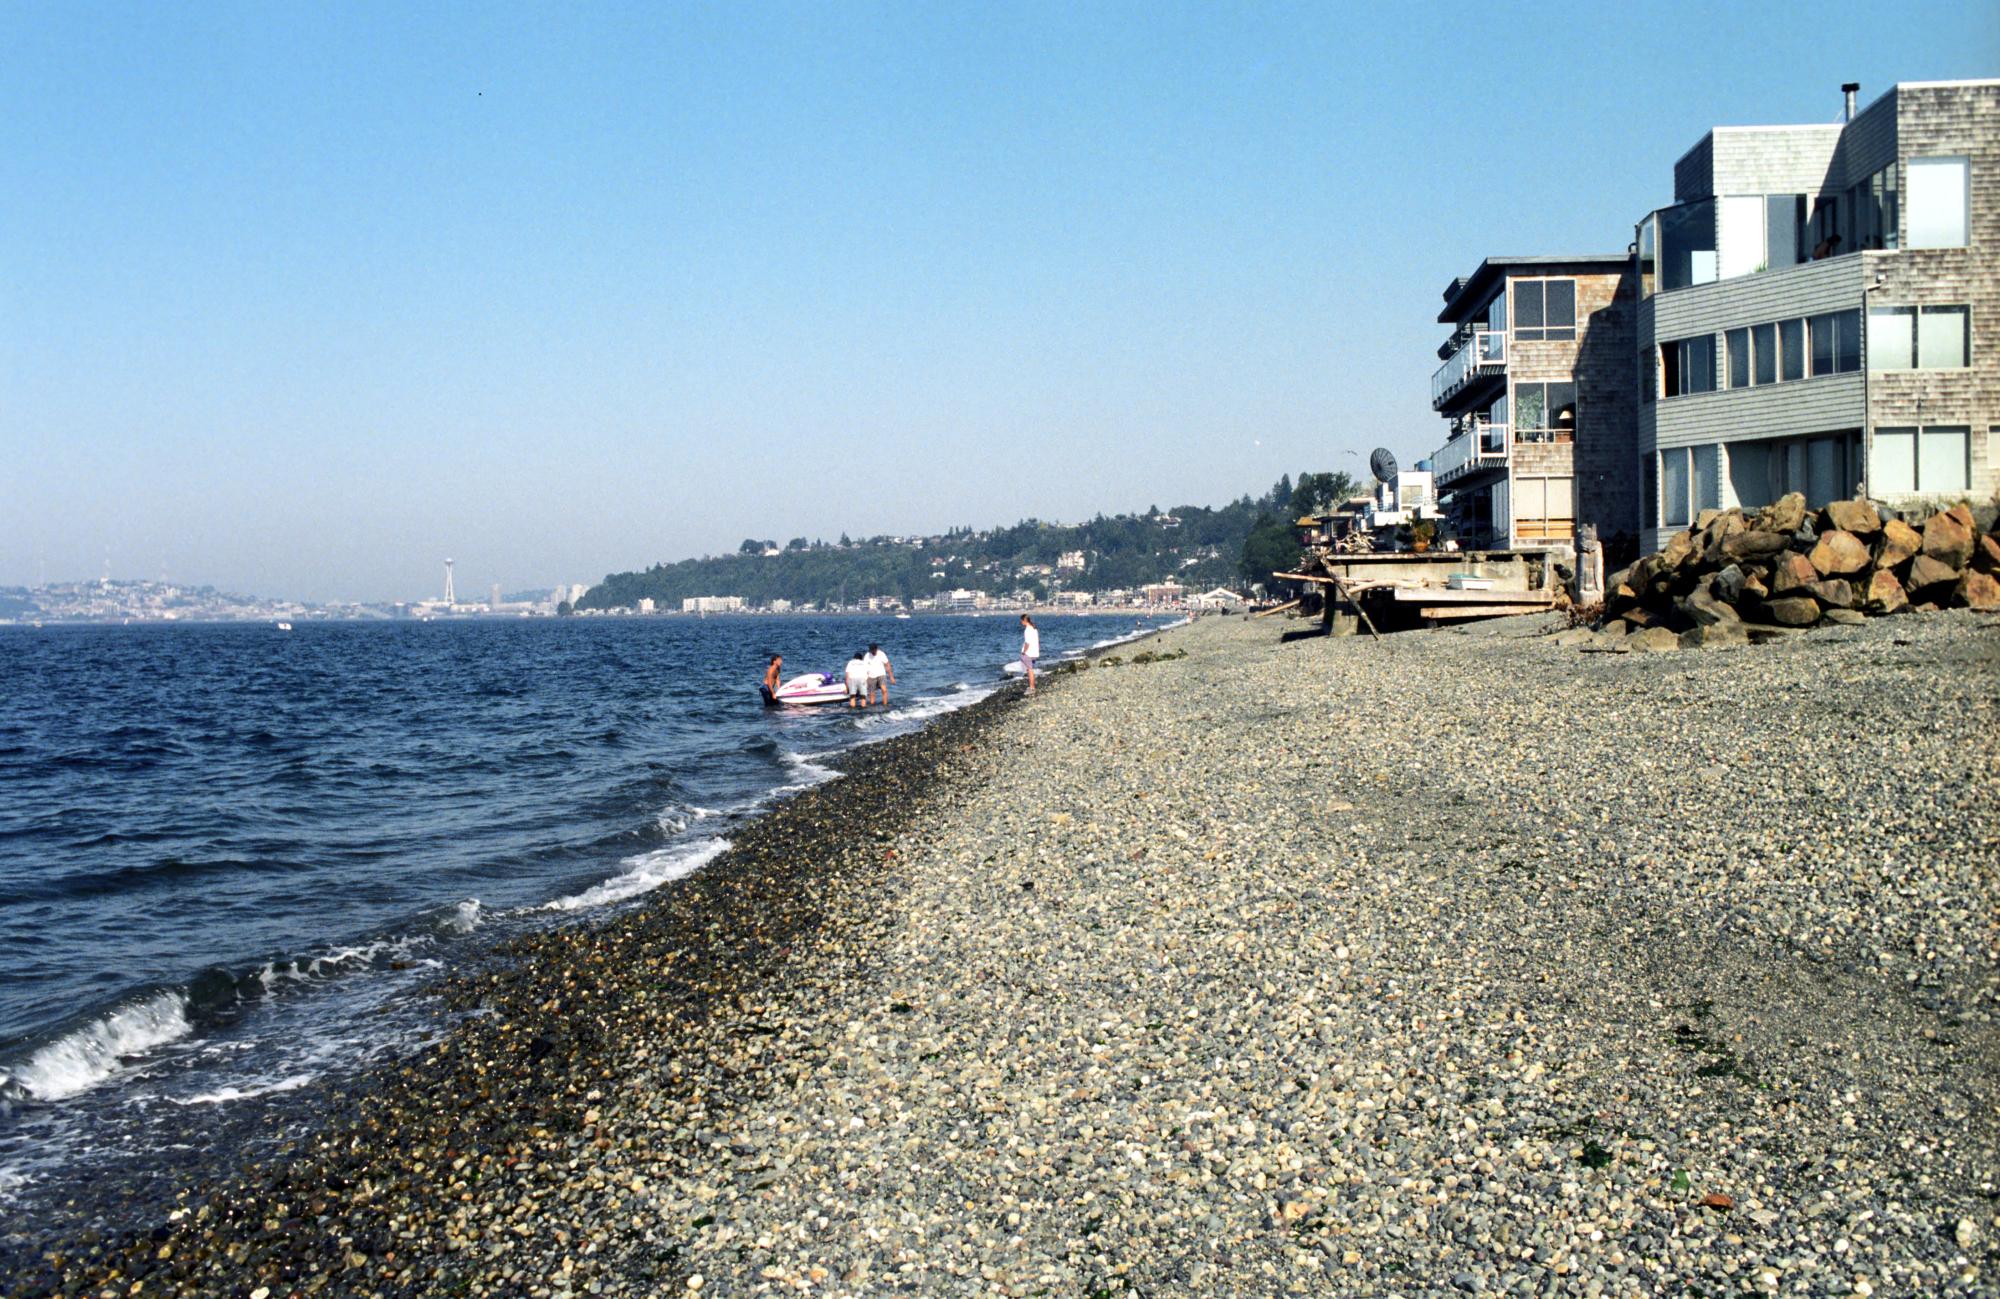 Seattle (1993) - Alki Beach